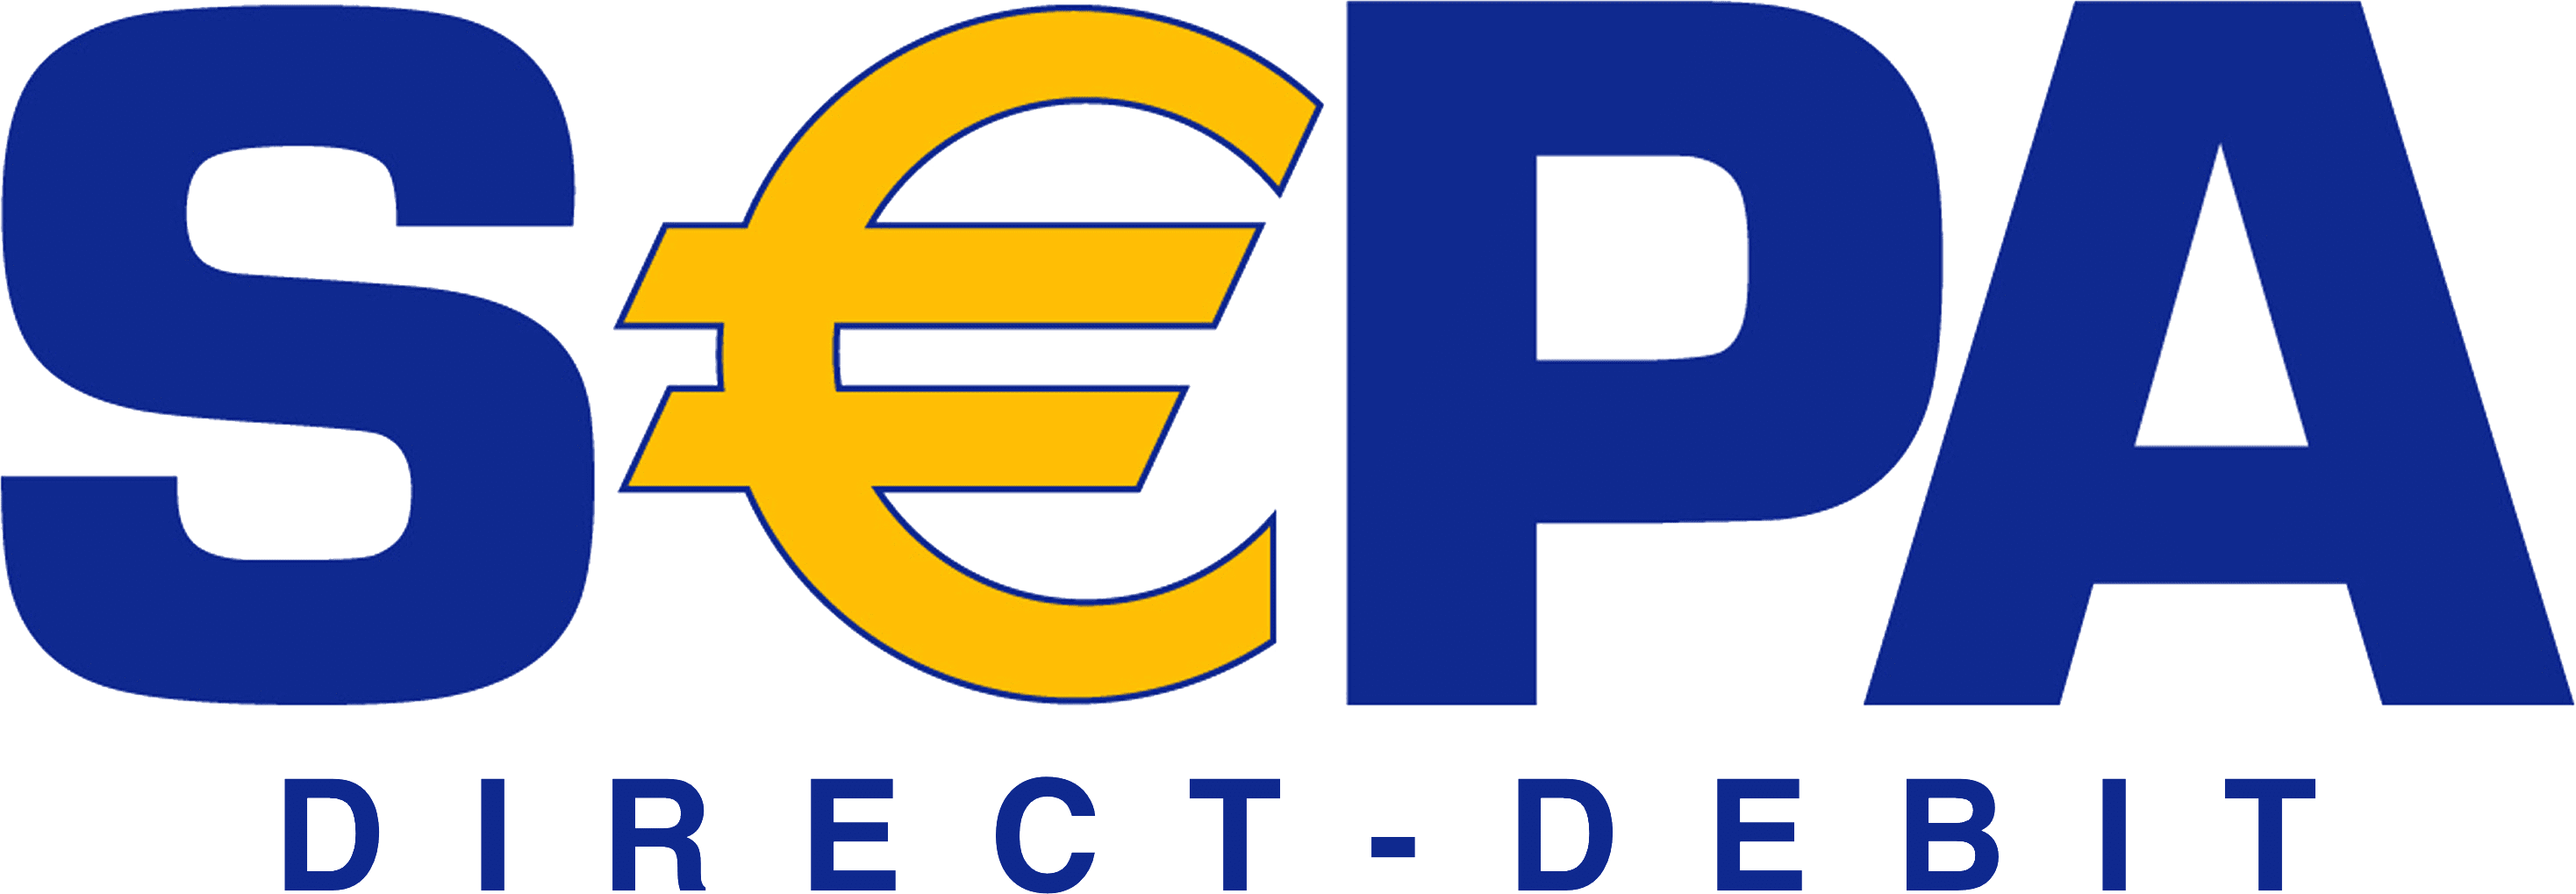 Merchant Payment Solutions - SEPA Direct Debit